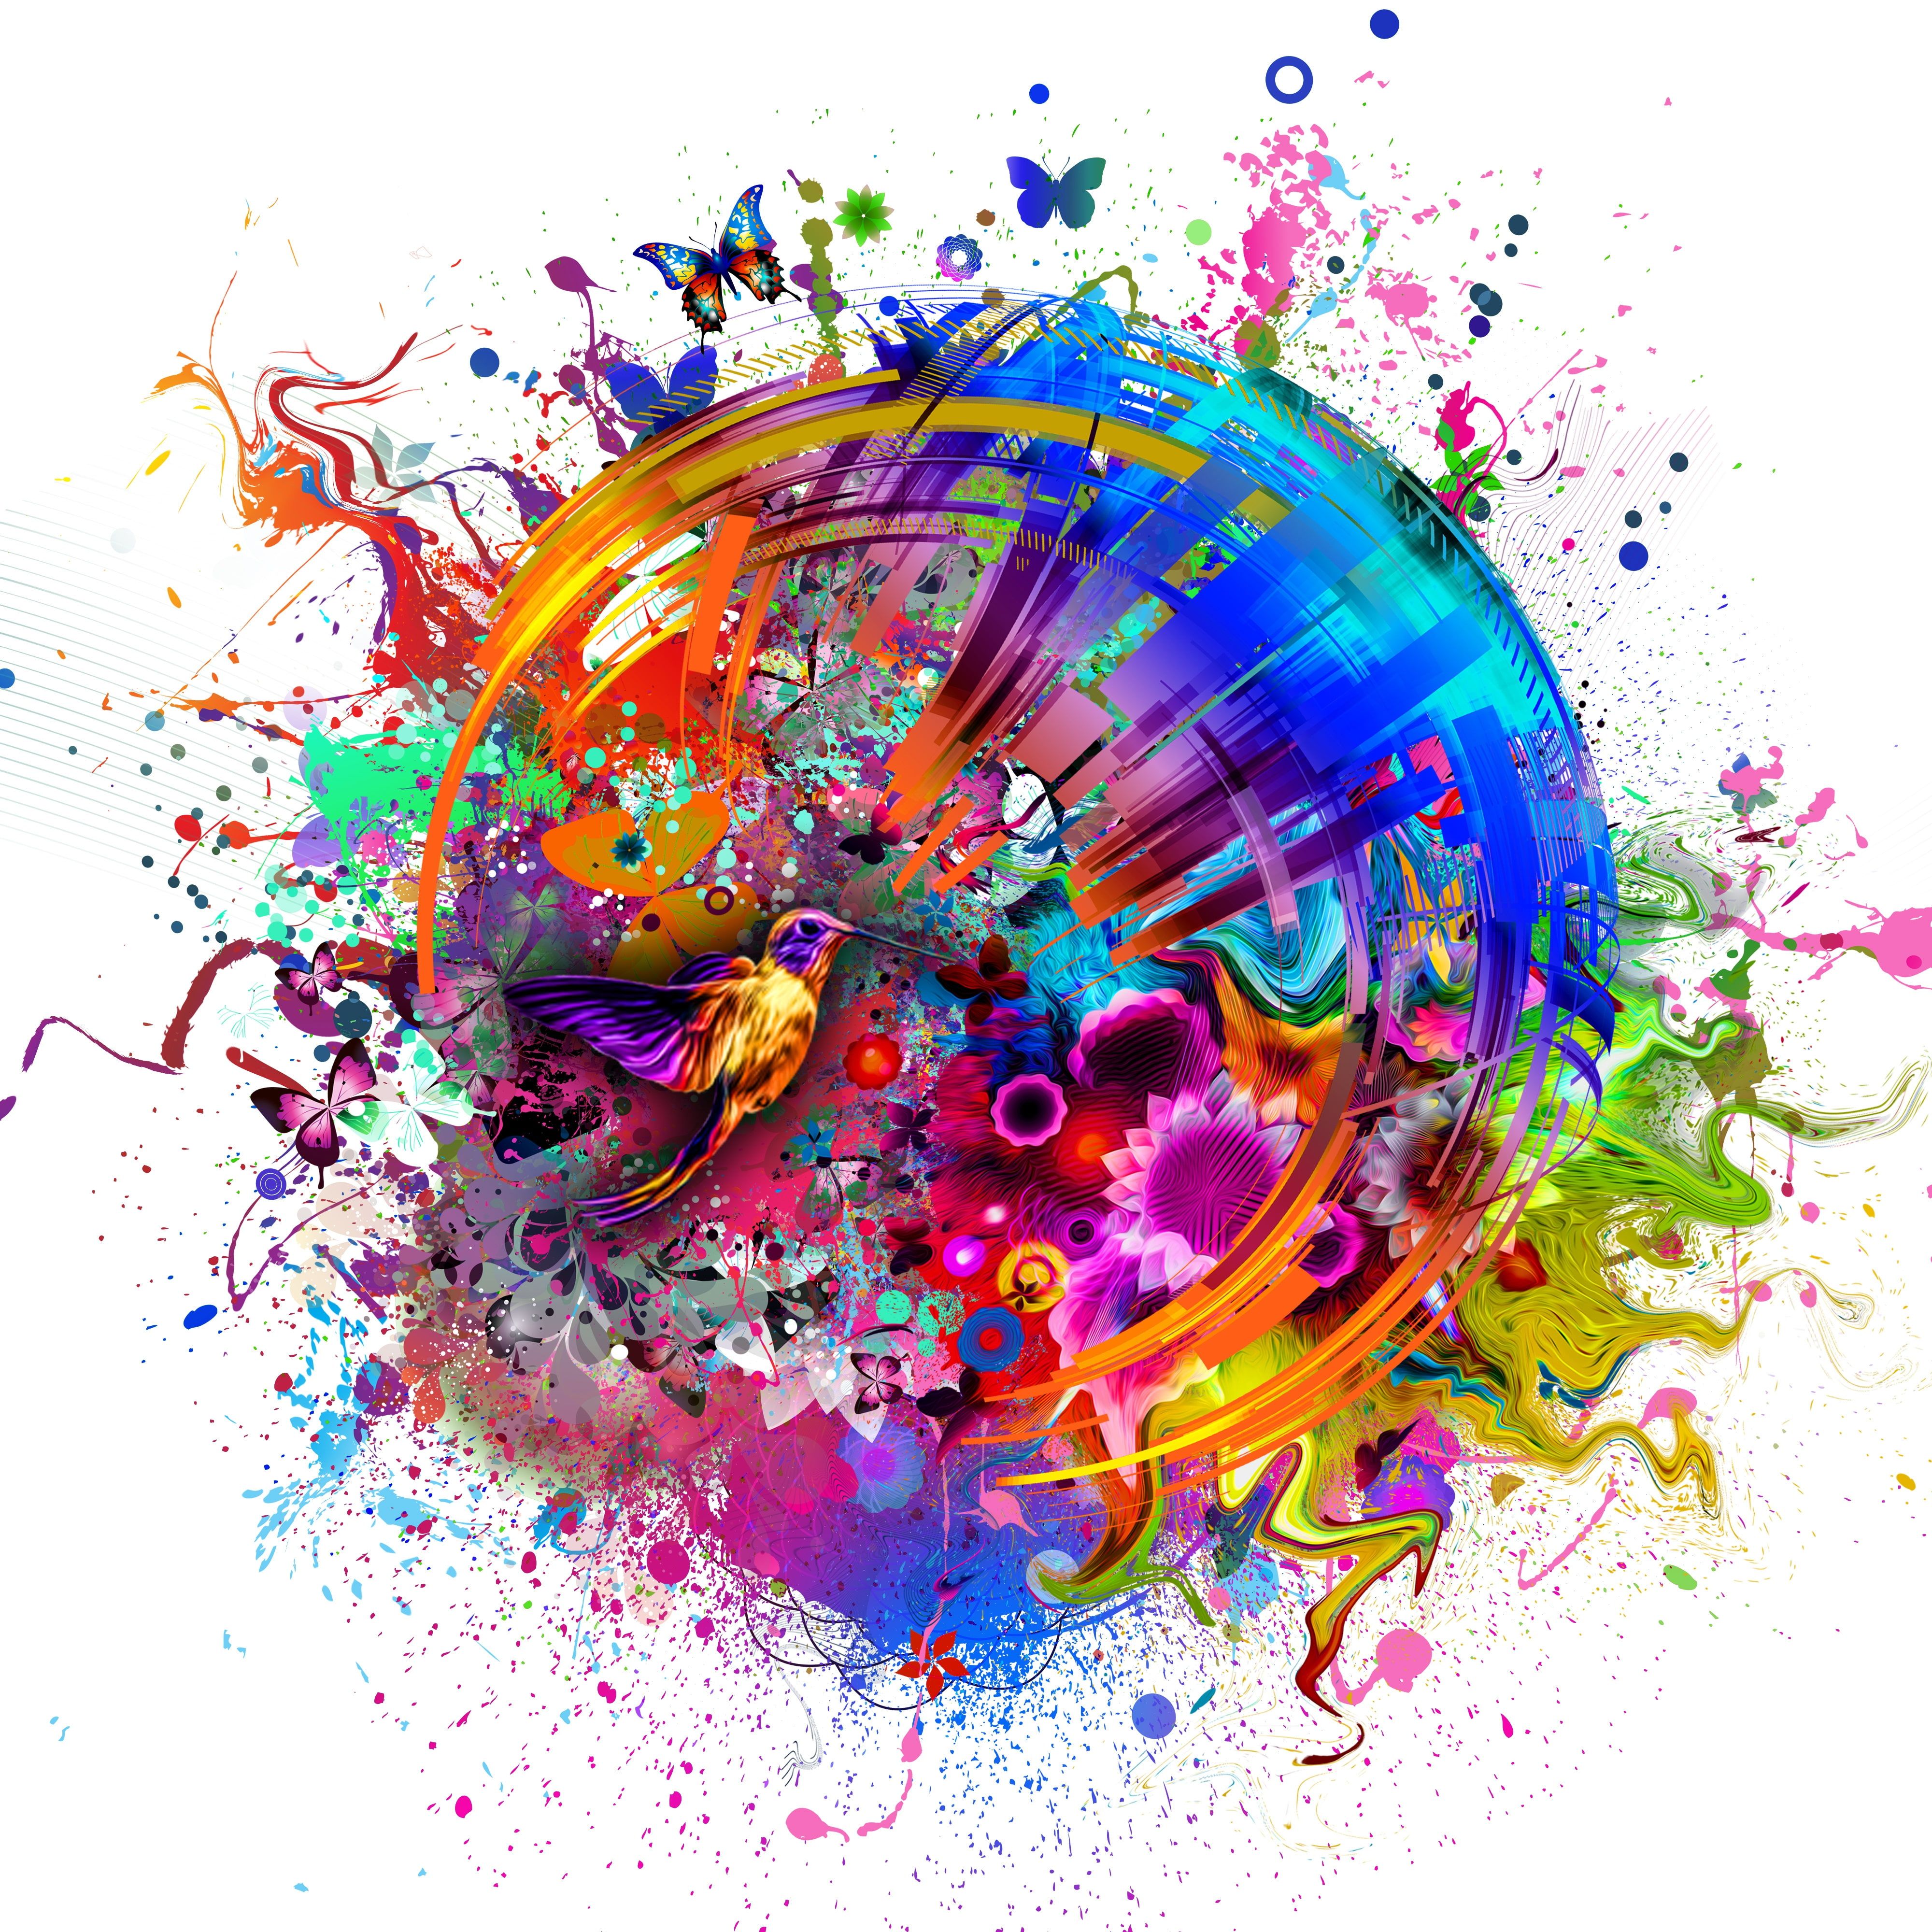 wallpaper de colores,graphic design,illustration,circle,graphics,art